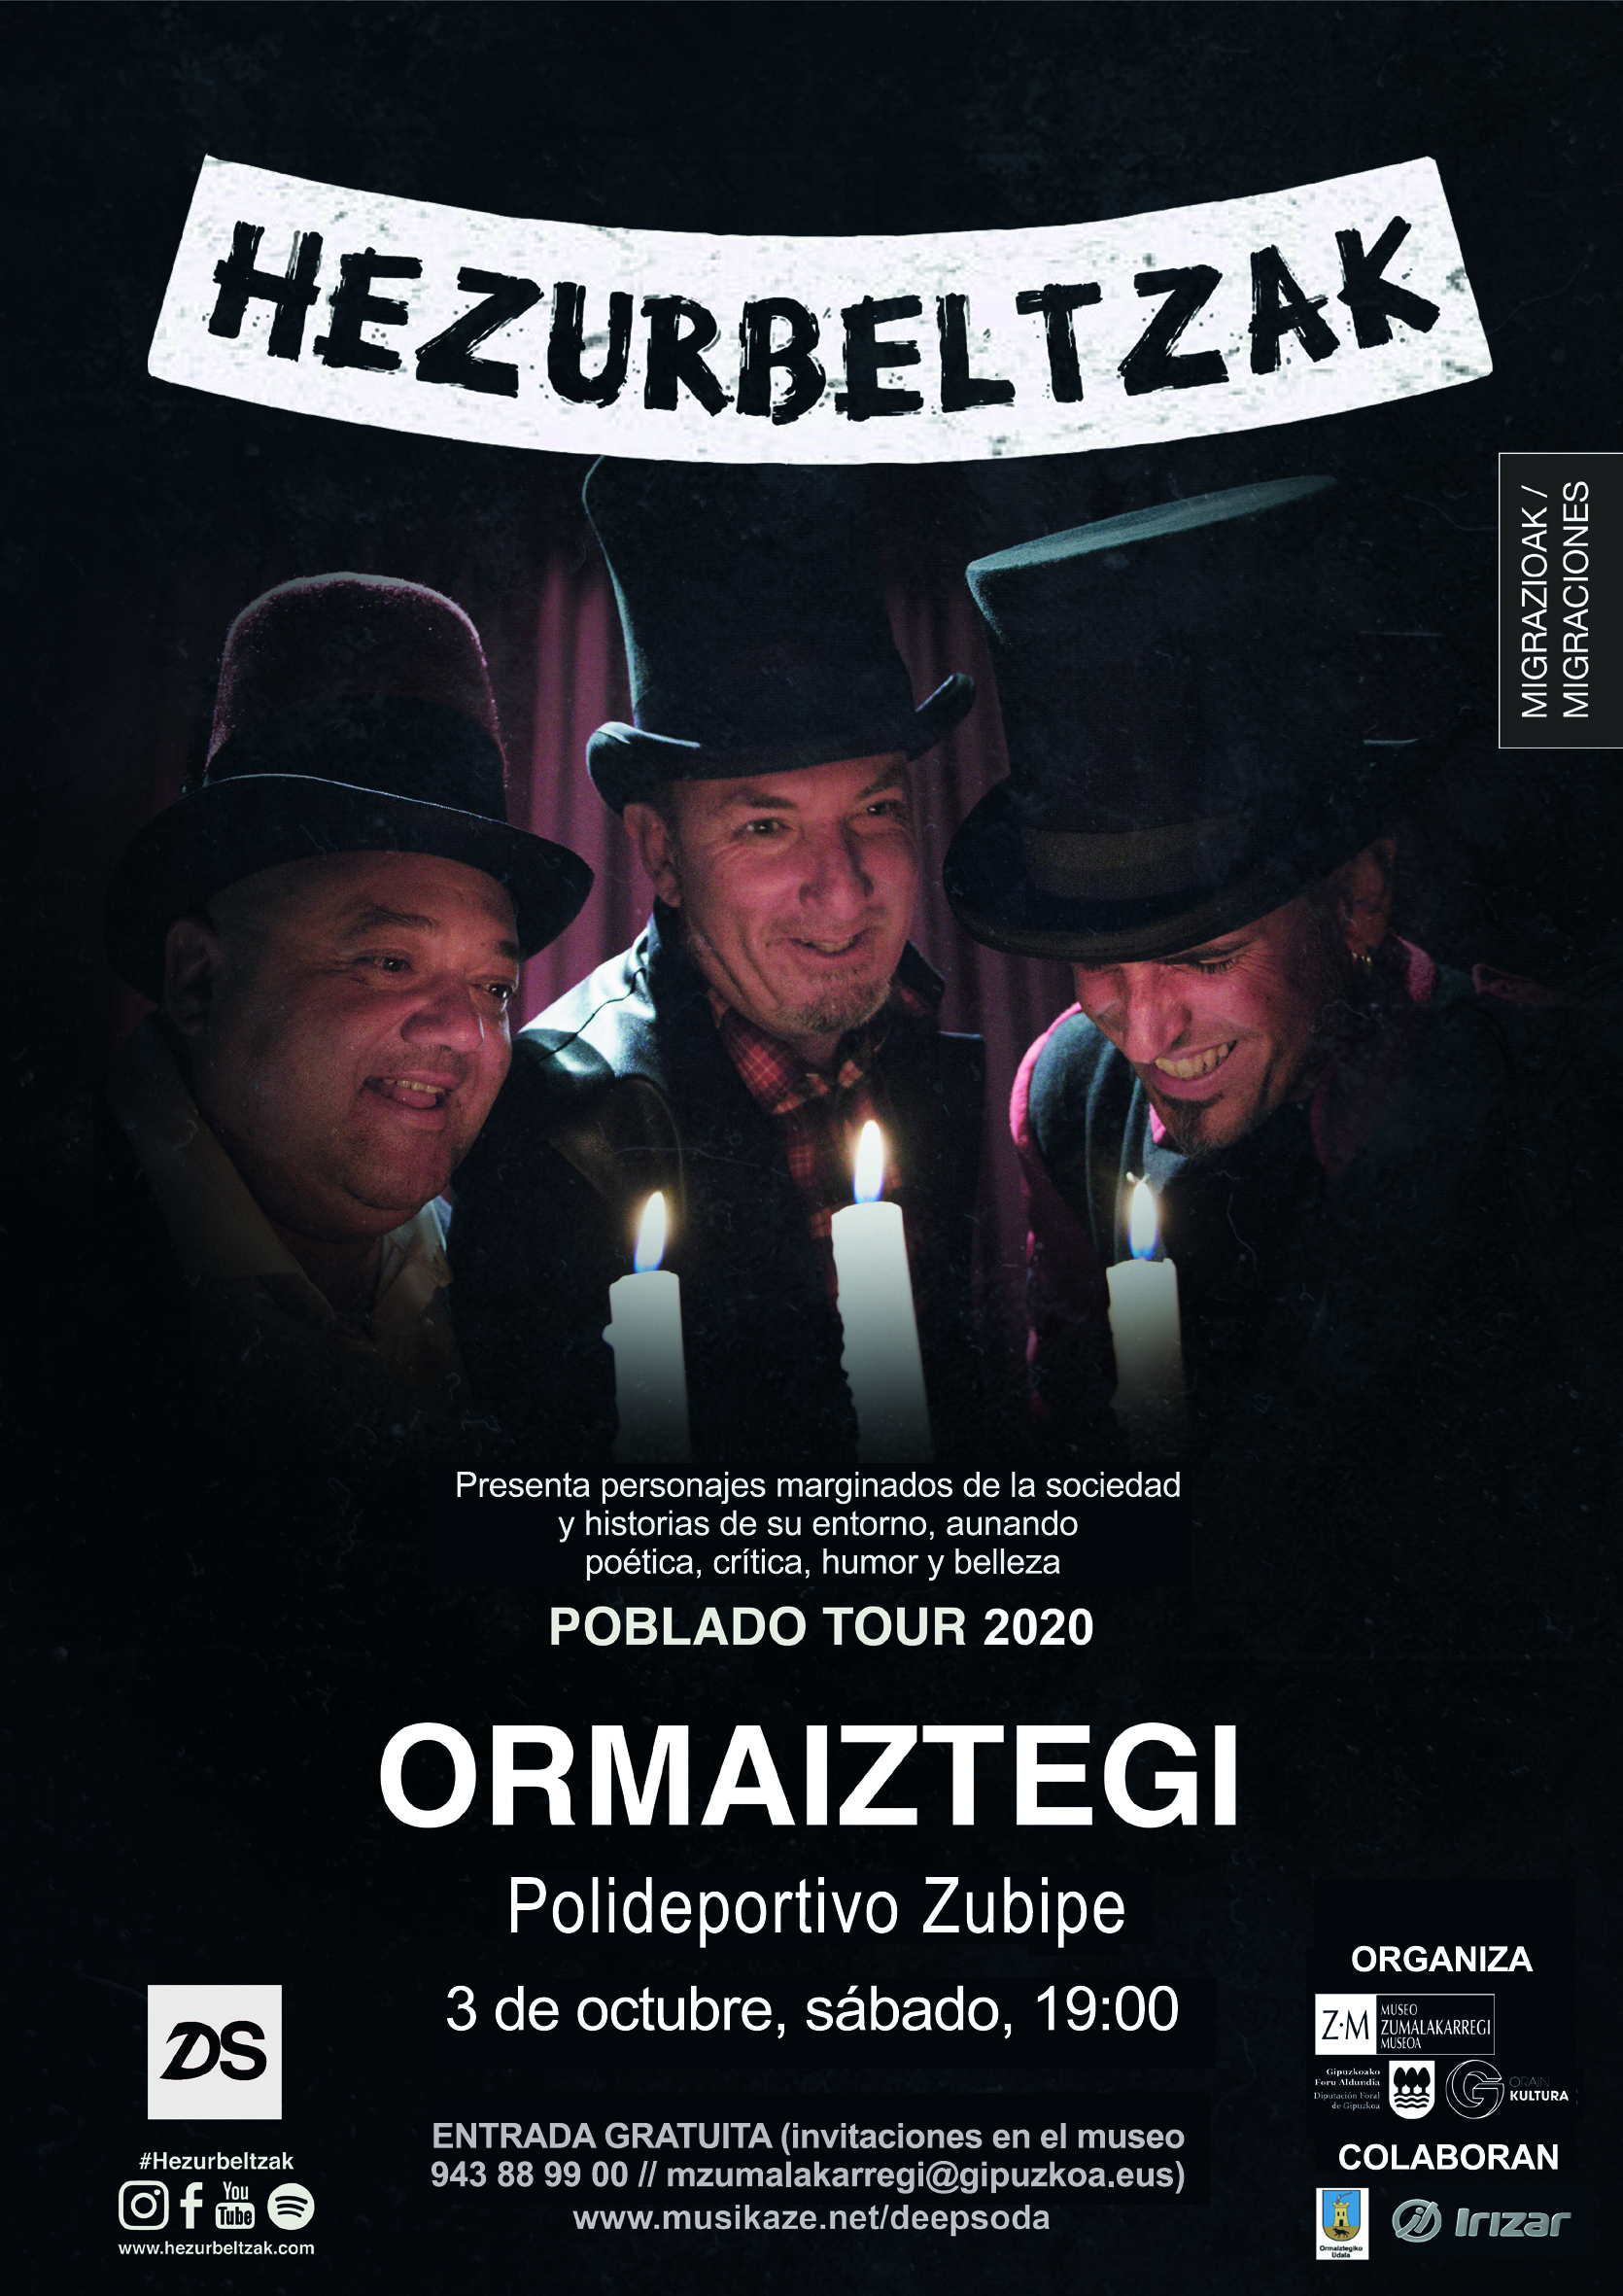 Cartel del concierto Hezurbeltzak 03.10.2020